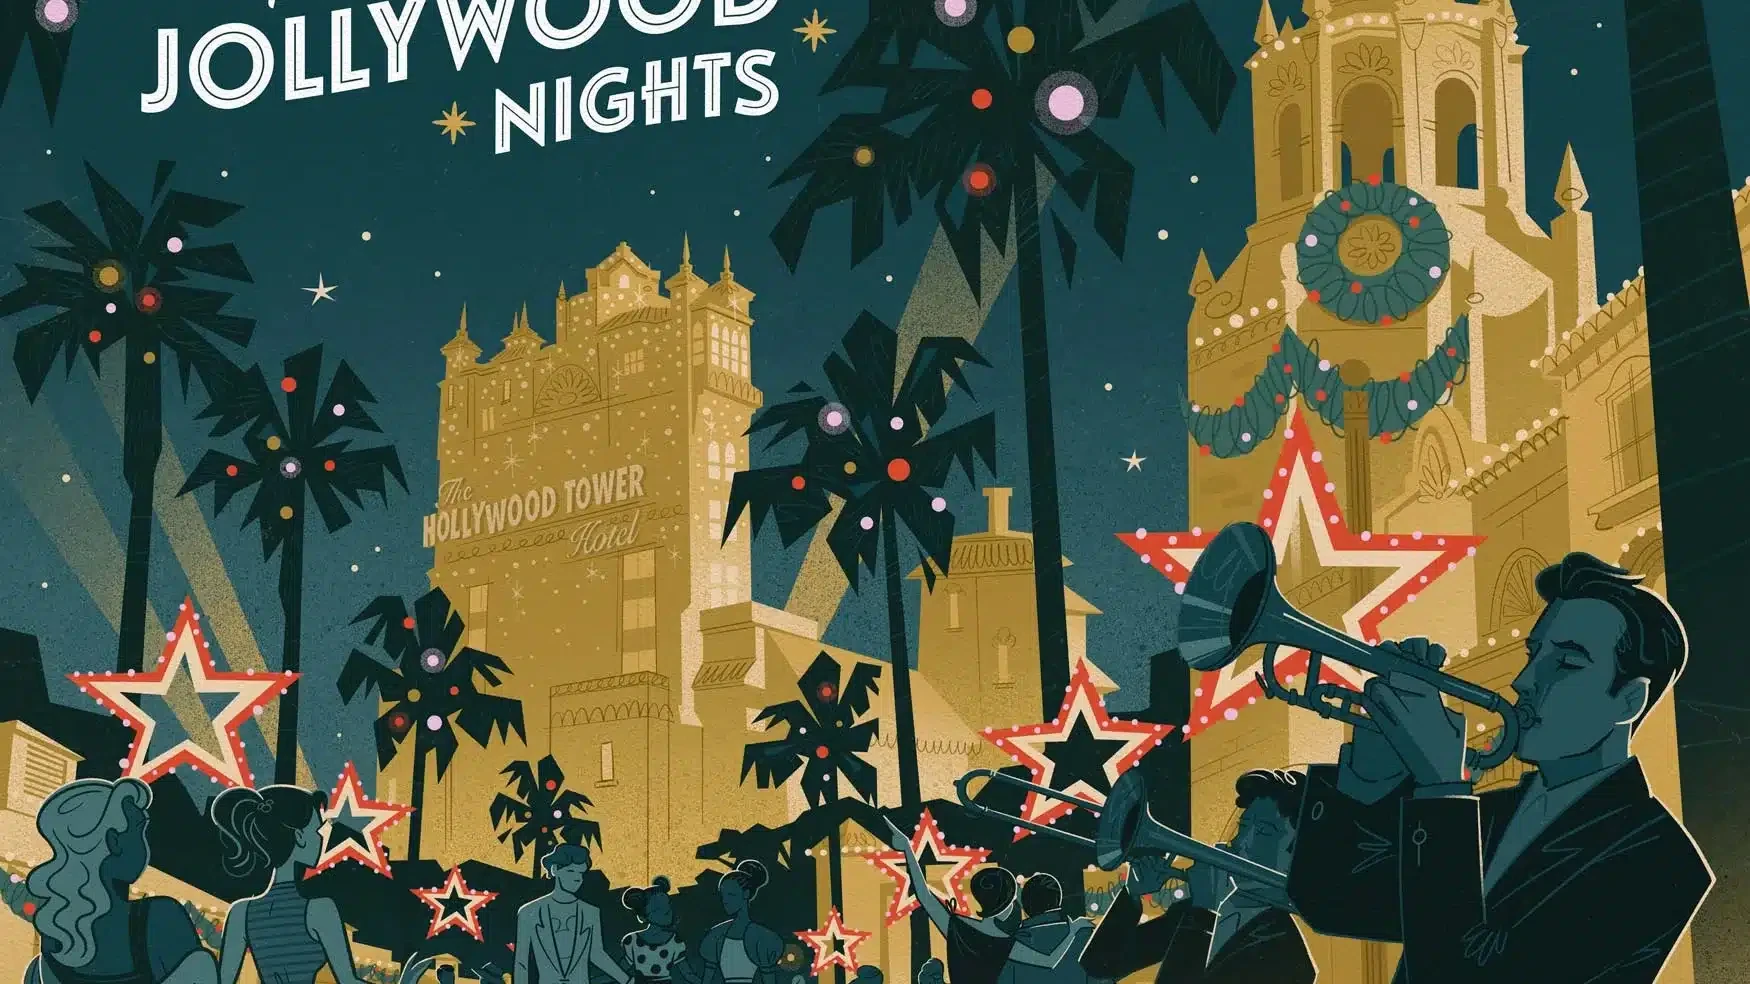 Disney Jollywood Nights - Disney World Holiday Party Guide